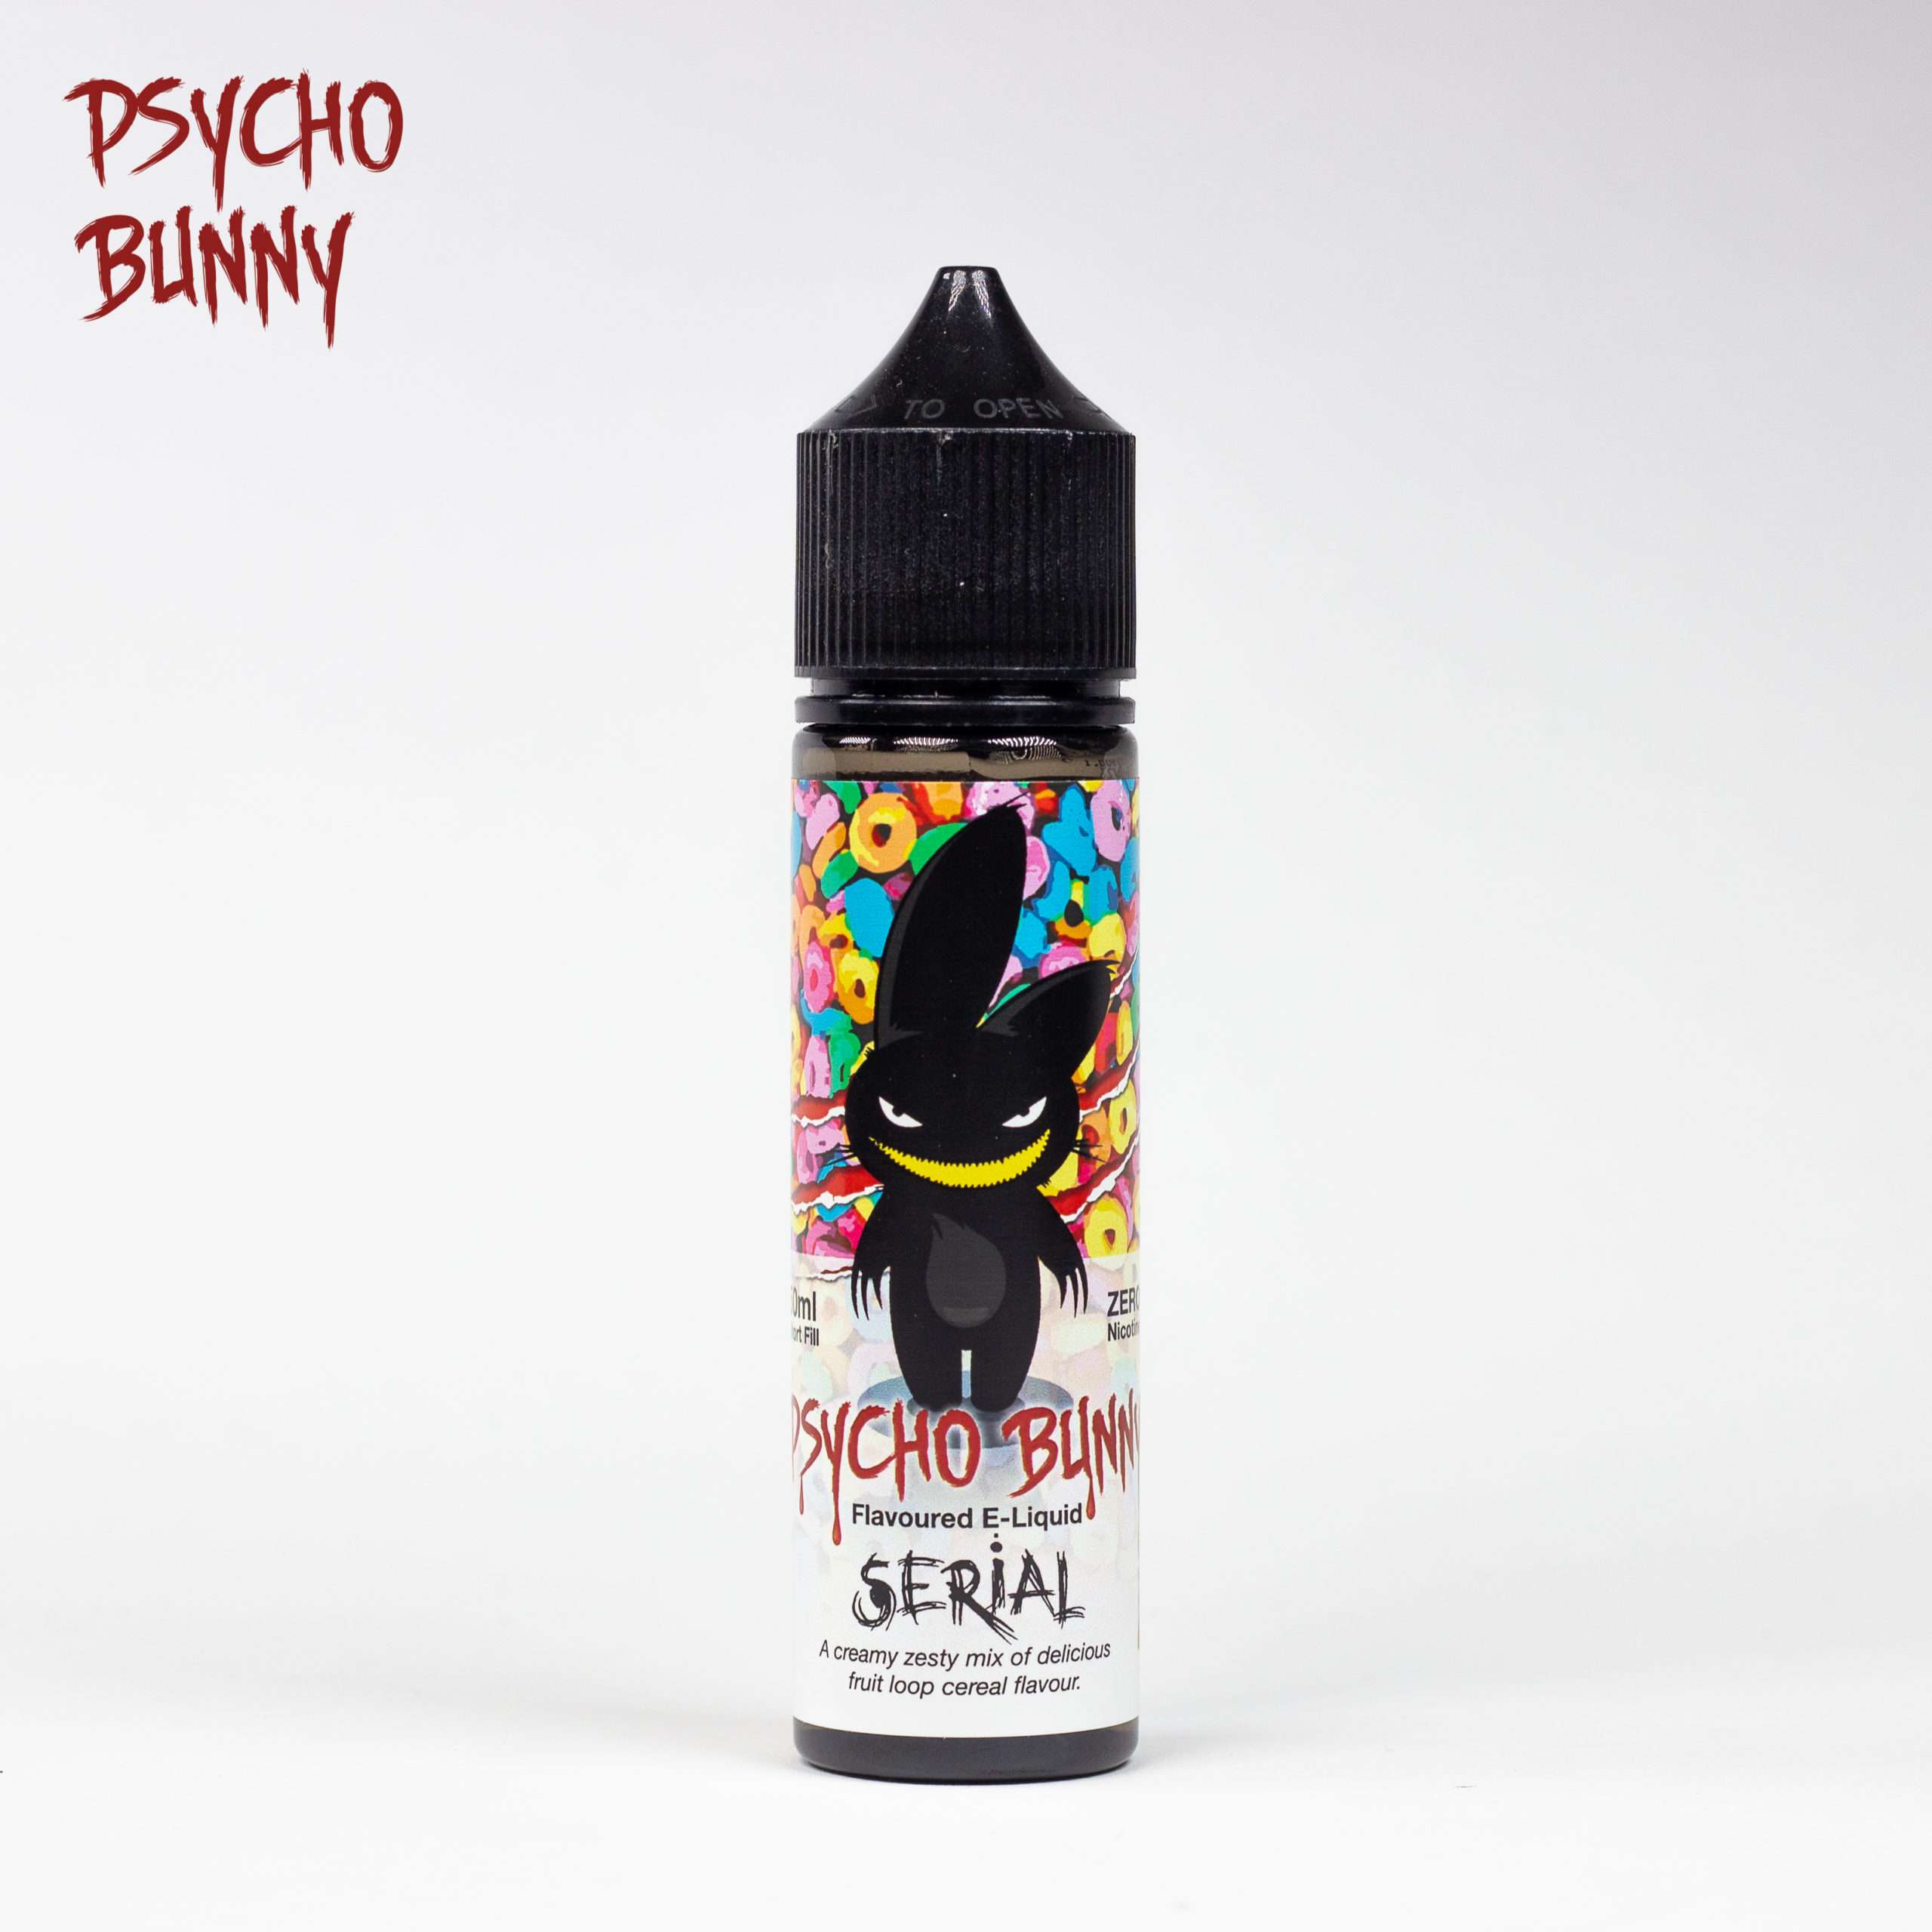  Psycho Bunny - Serial - 50ml 